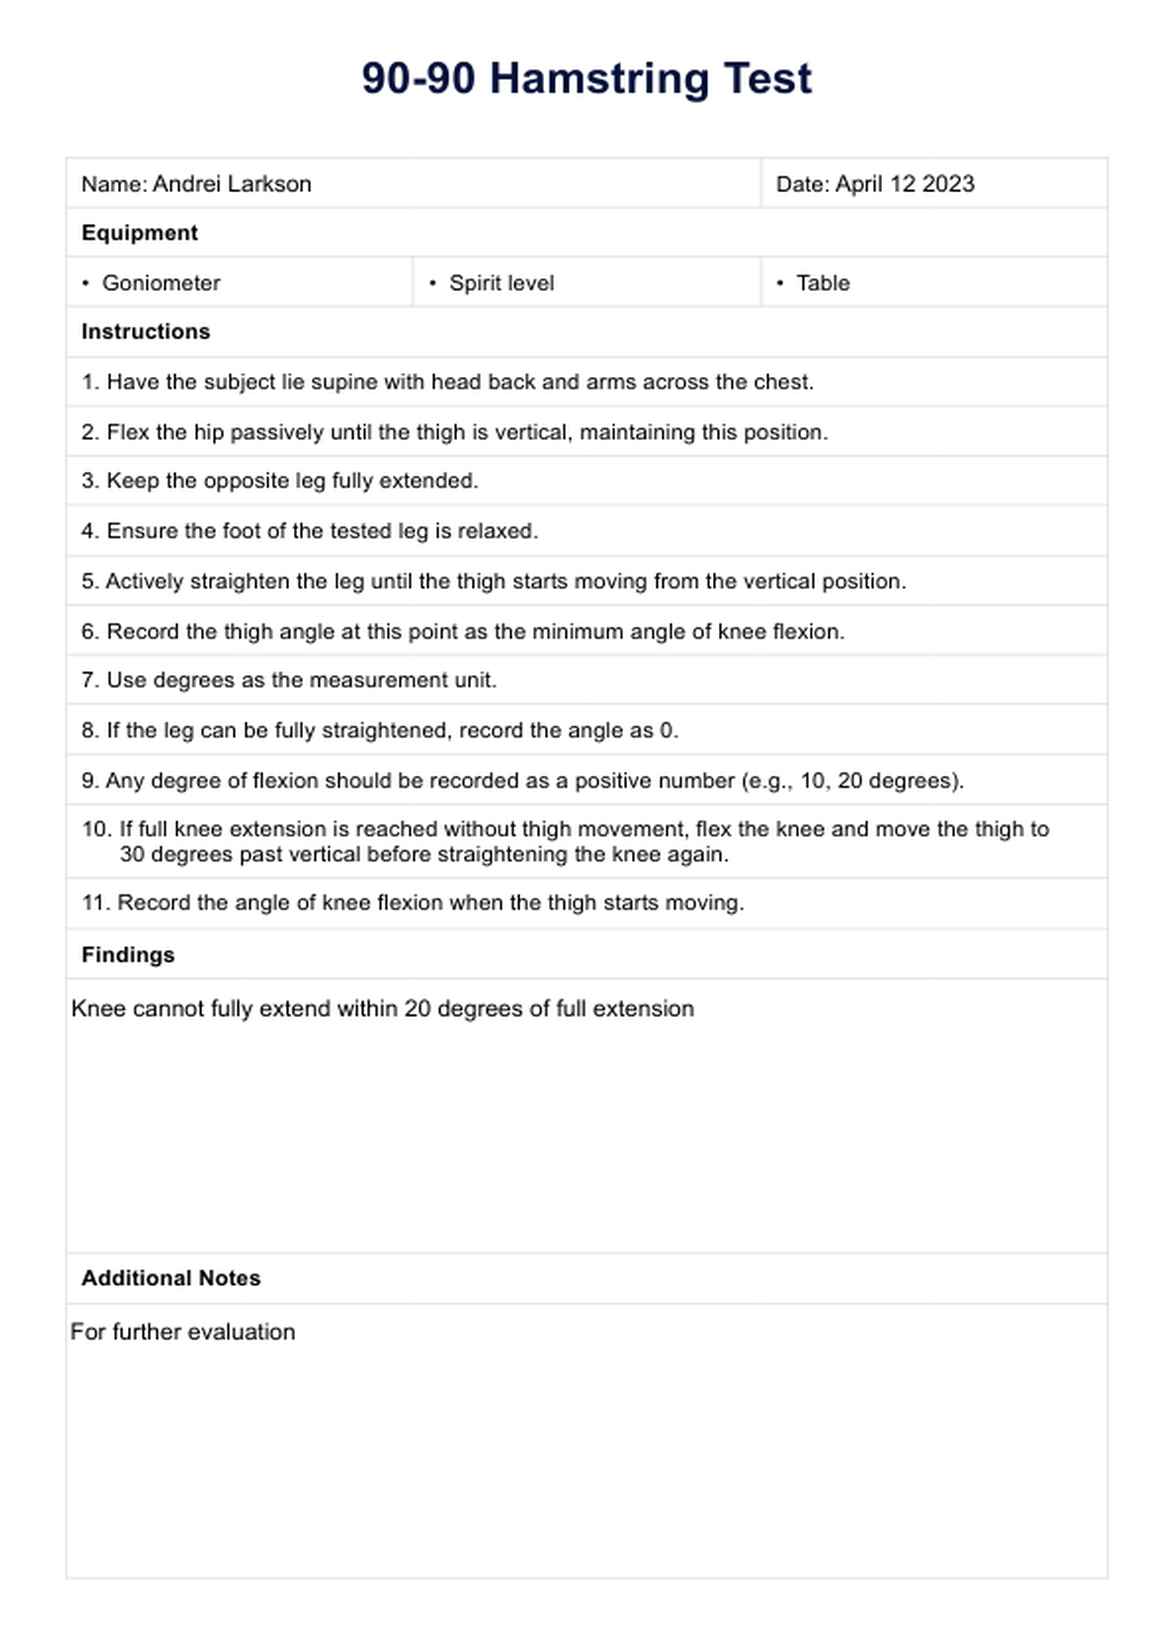 90-90 Hamstring Test PDF Example